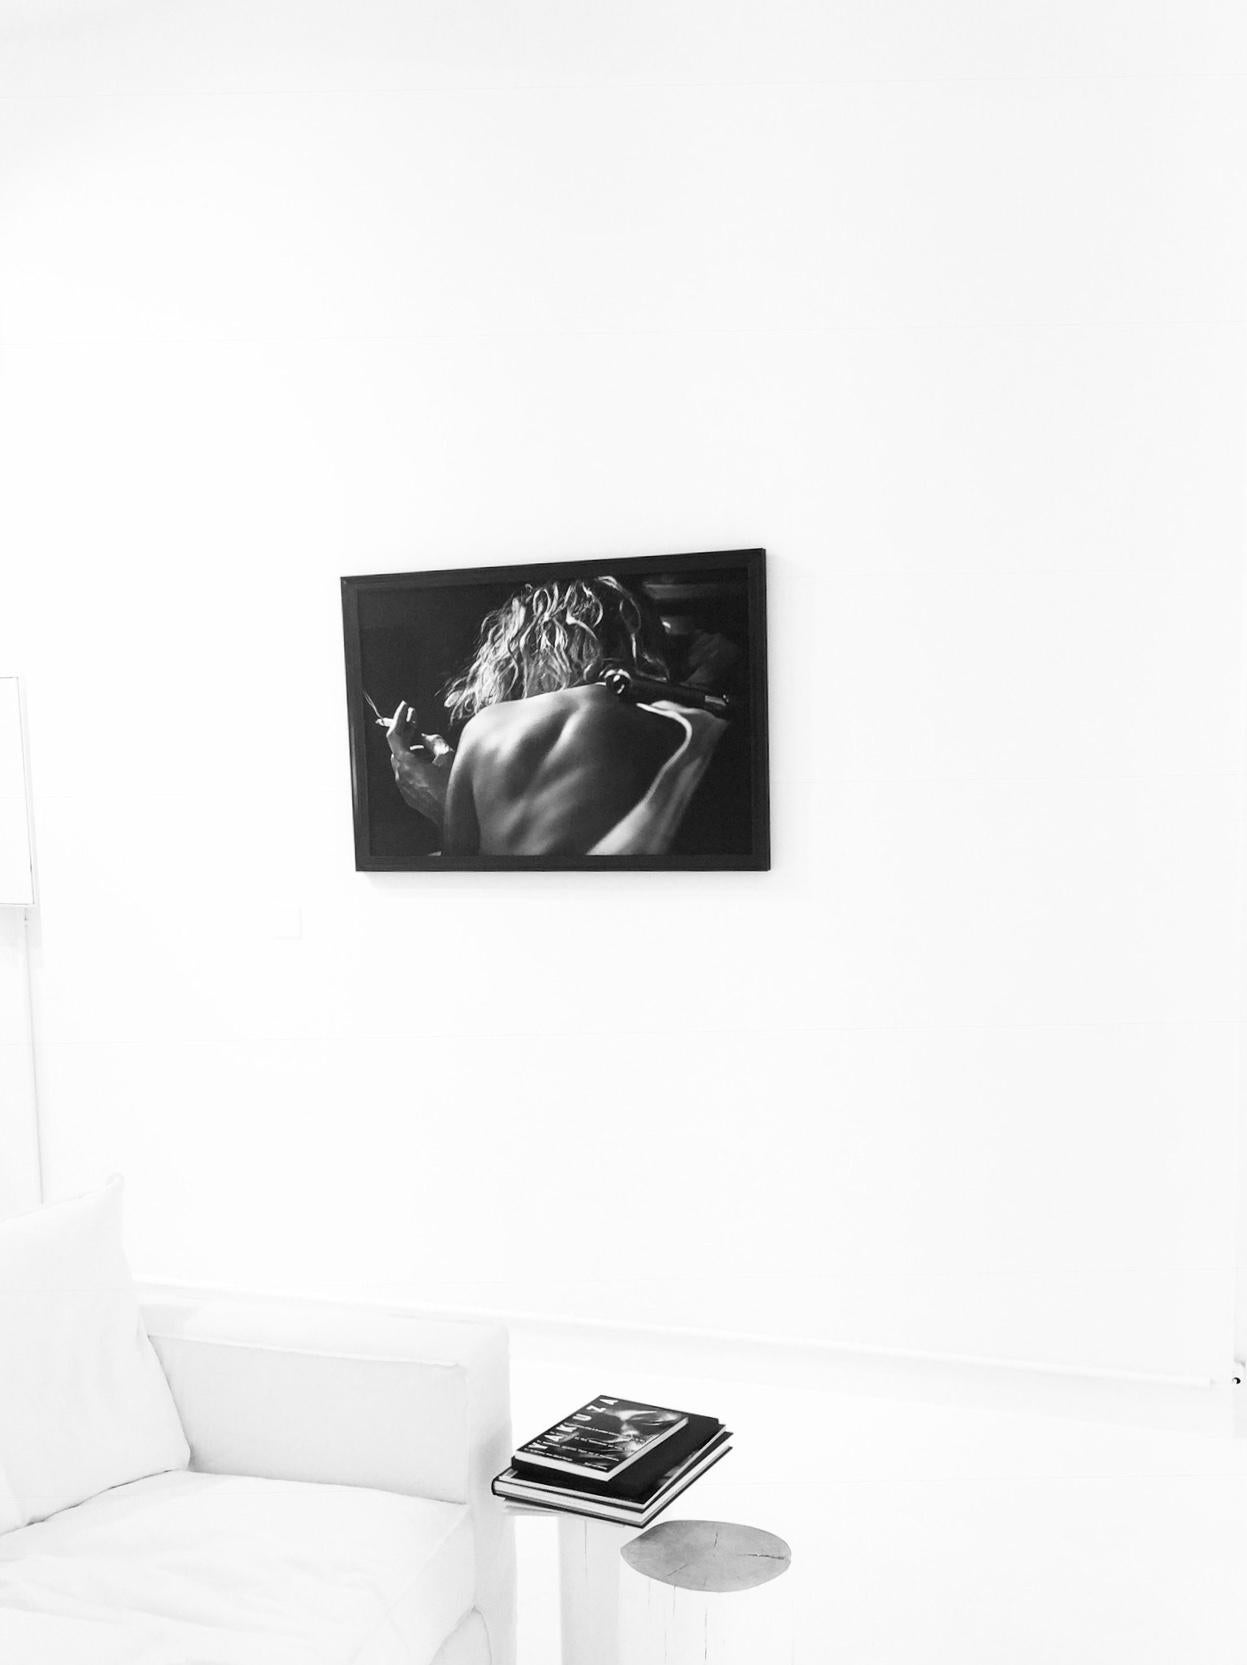 Love letter, 2015, Fine Art Print, Contemporary Black and White photography - Photograph by Alberto Venzago